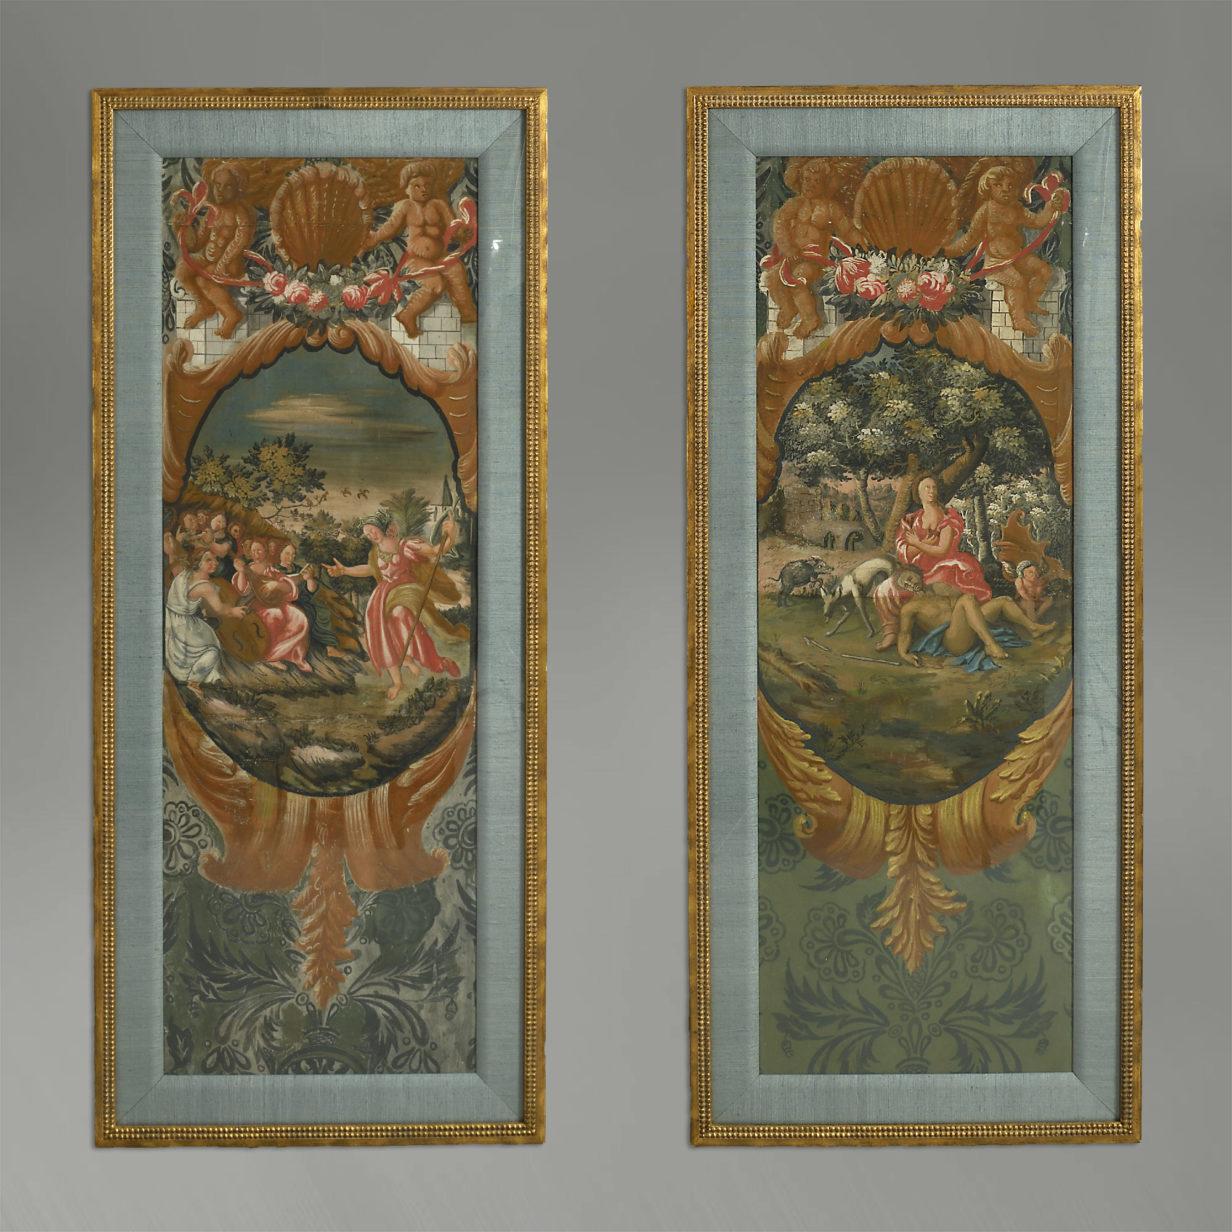 Pair of allegorical panels